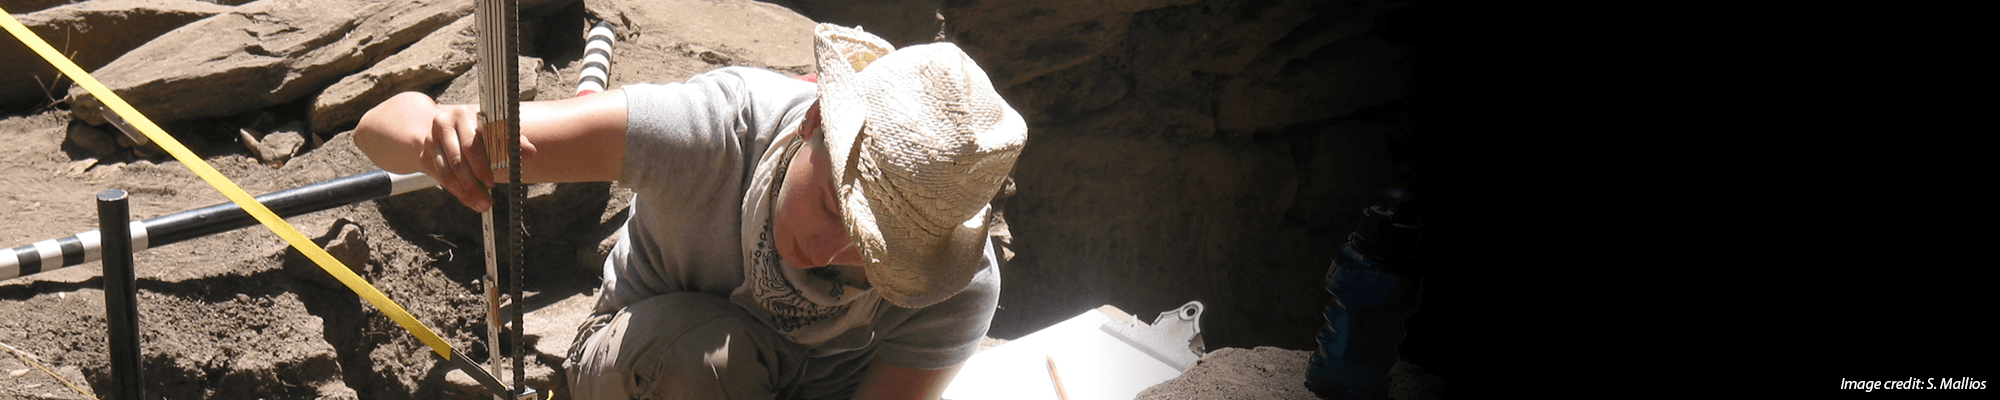 student works at archeological dig